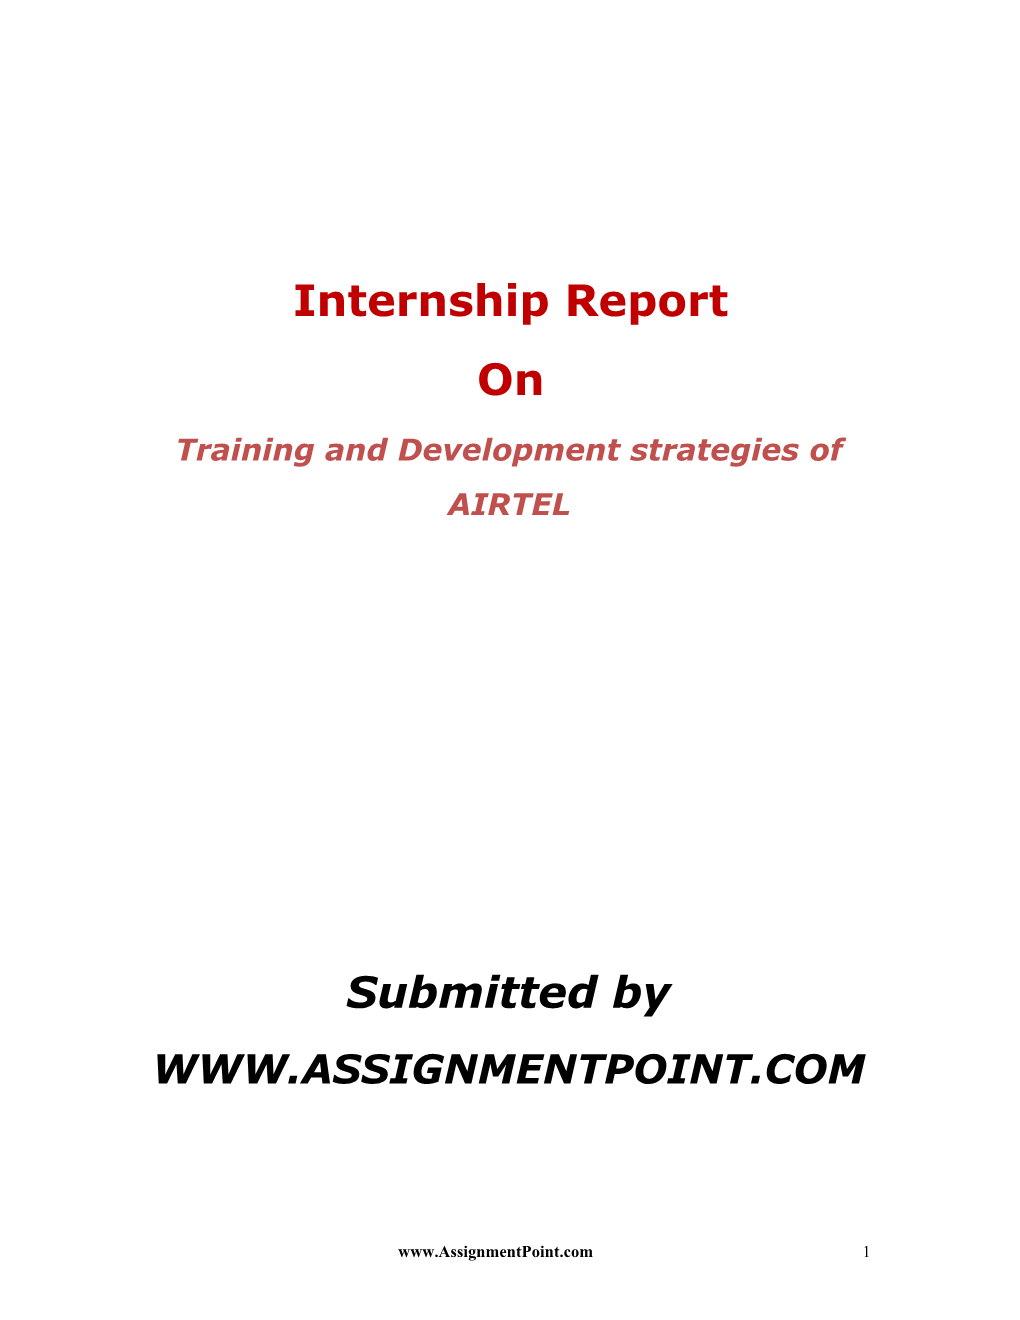 Training and Development Strategies of AIRTEL